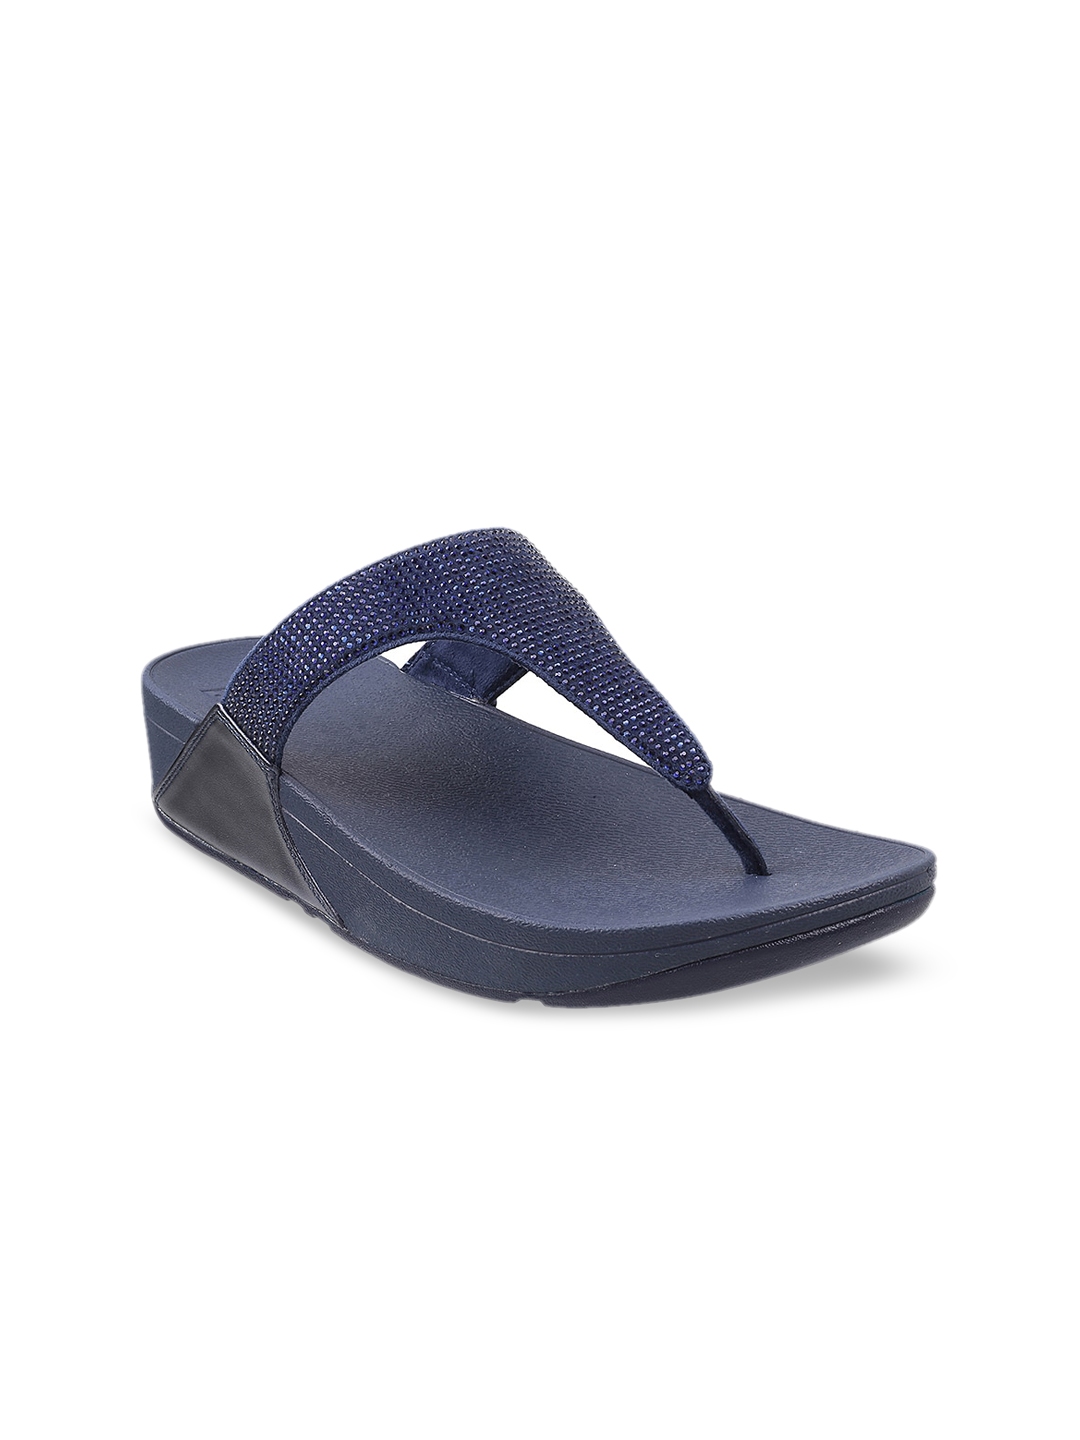 Buy Fitflop Blue Flatform Sandals - Heels for Women 16049450 | Myntra